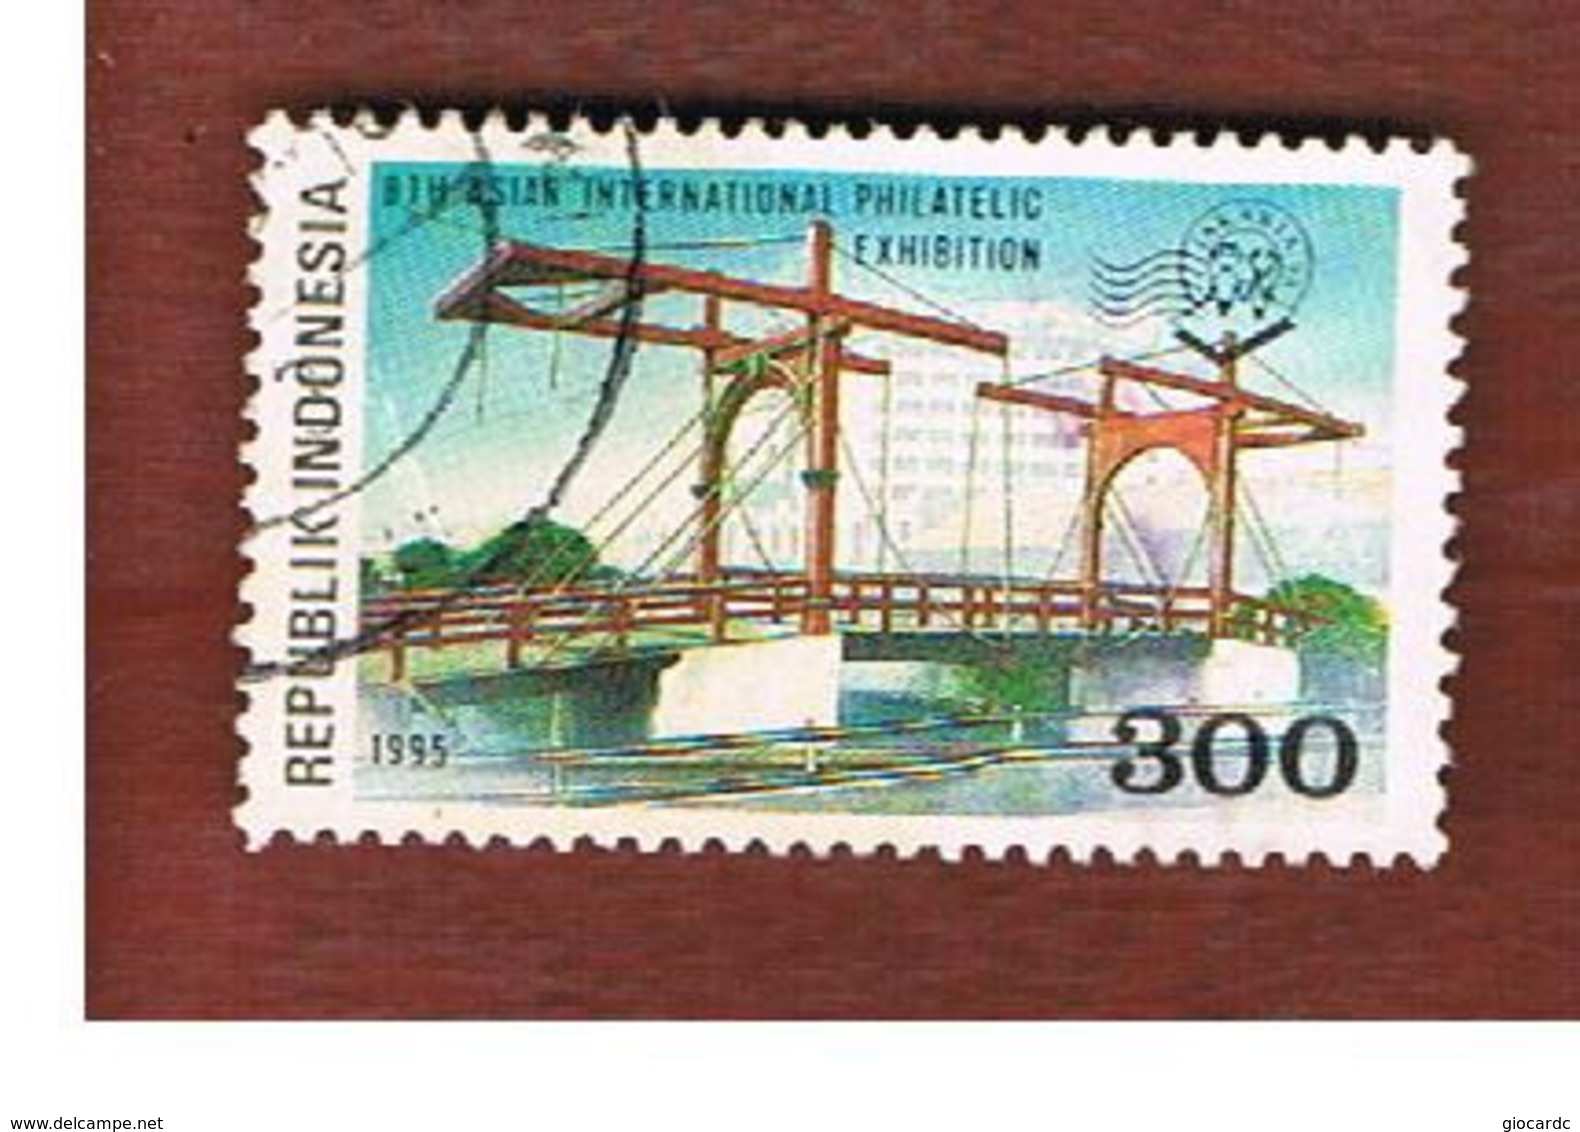 INDONESIA   - SG 2186  -  1995 "JAKARTA '95" ASIAN STAMP EXN. DRAWBRIDGE - USED ° - Indonesia